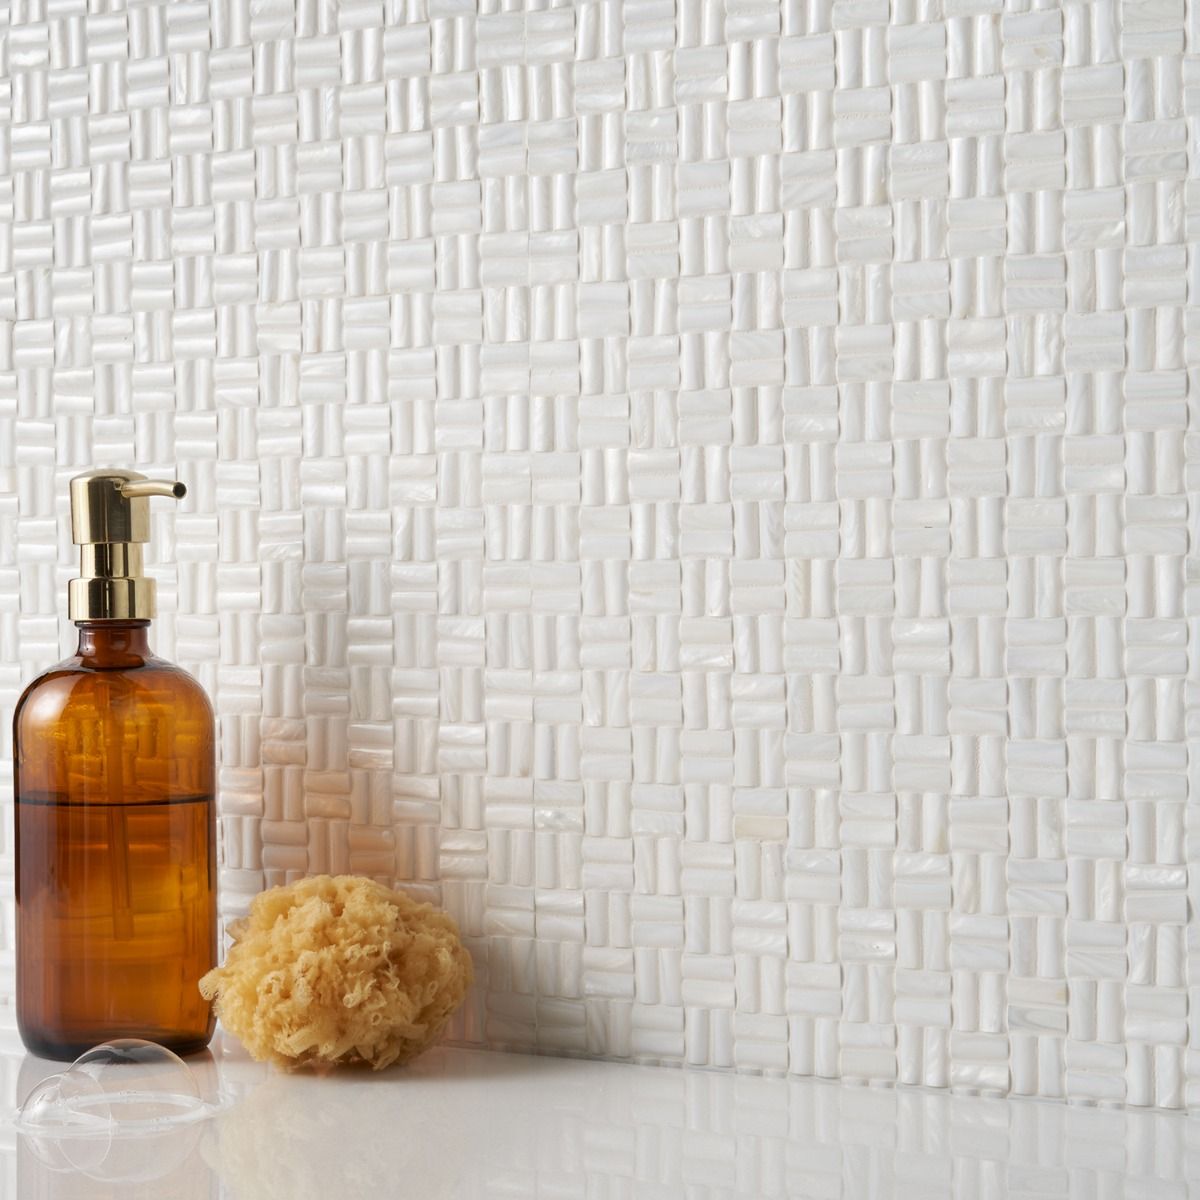 Tilebar Sample- Serene White 3D Seamless Pearl Polished Mosaic Tile, Backsplash and Wall | Sample